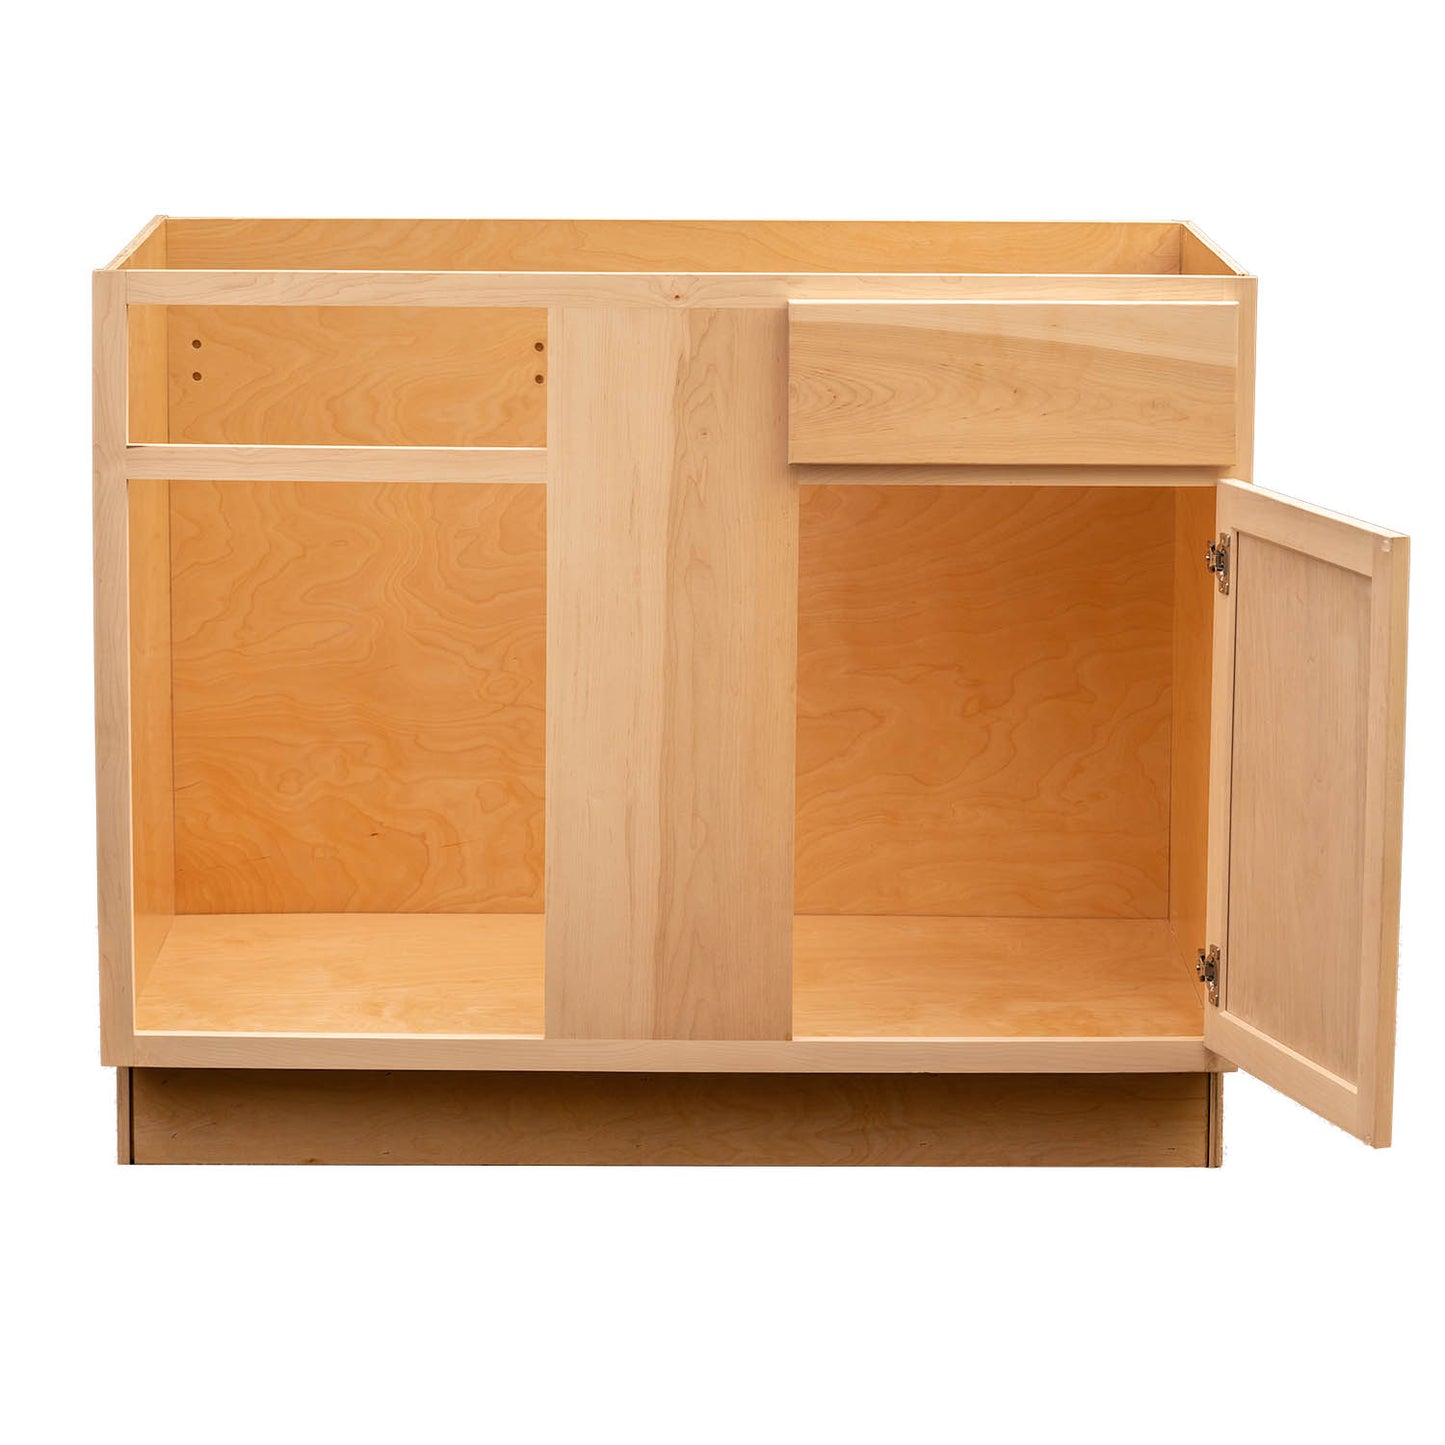 Quicklock RTA (Ready-to-Assemble) Raw Maple Blind Base Corner Cabinet | 42"Wx34.5"Hx24"D